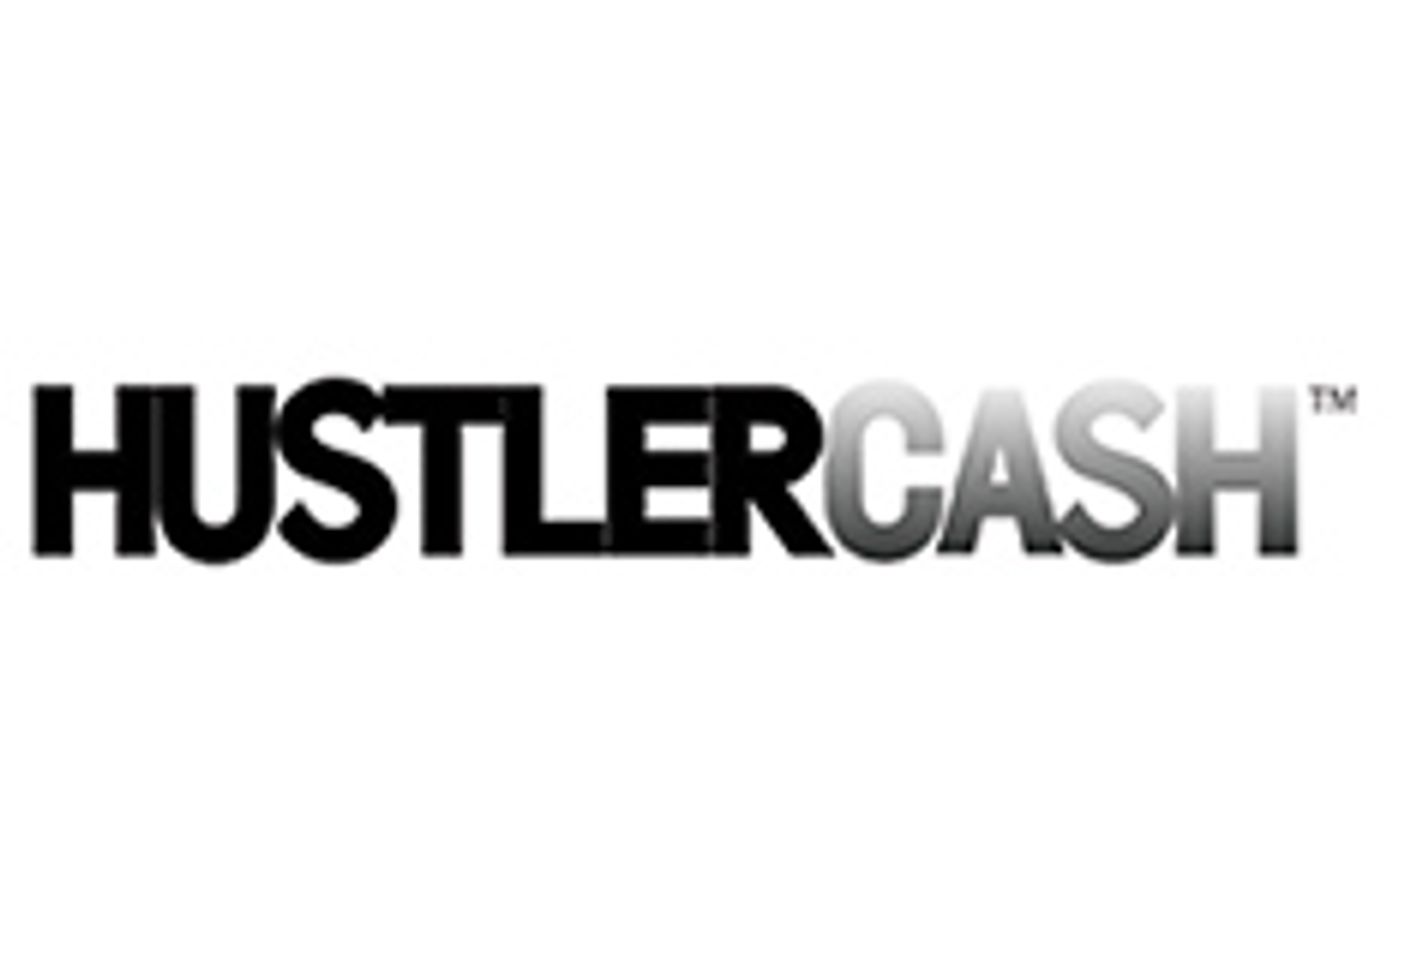 HustlerCash Sees 'Massive' Number of Subscriptions for DanielleStaubRaw.com